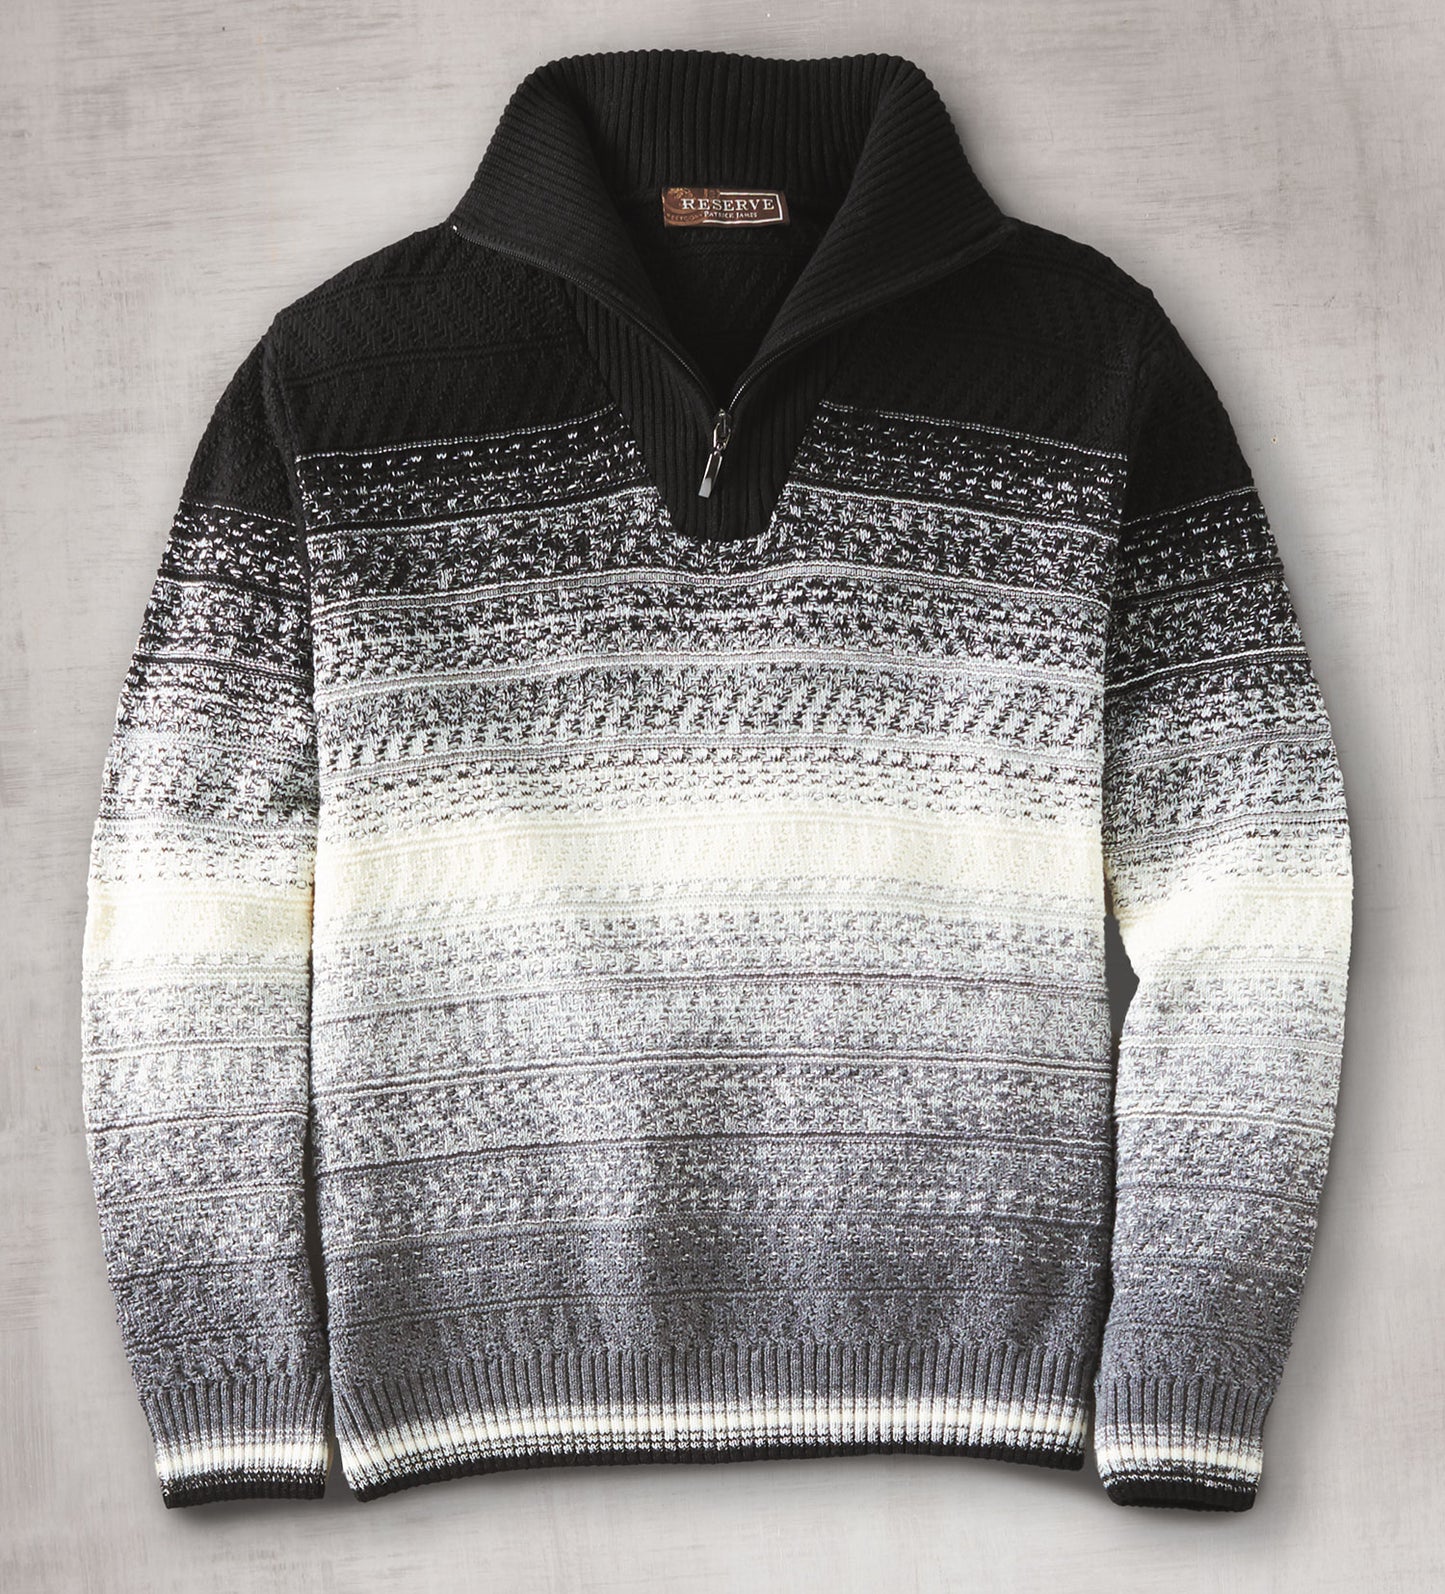 Reserve Textured Gradient Sweater